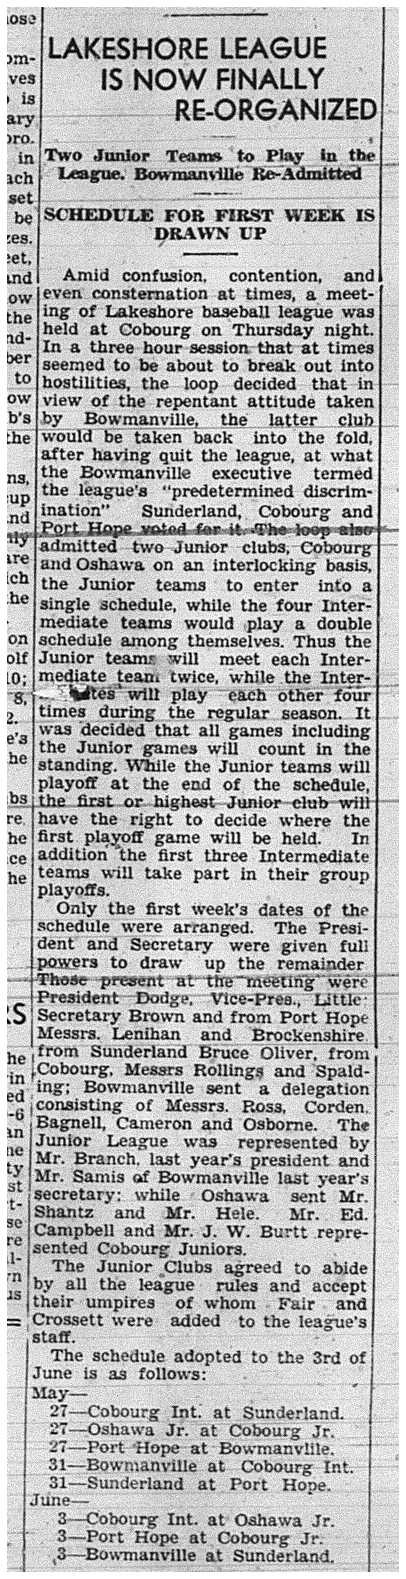 1939-05-25 Baseball -Lakeshore Intermediate League includes 2 Junior Teams